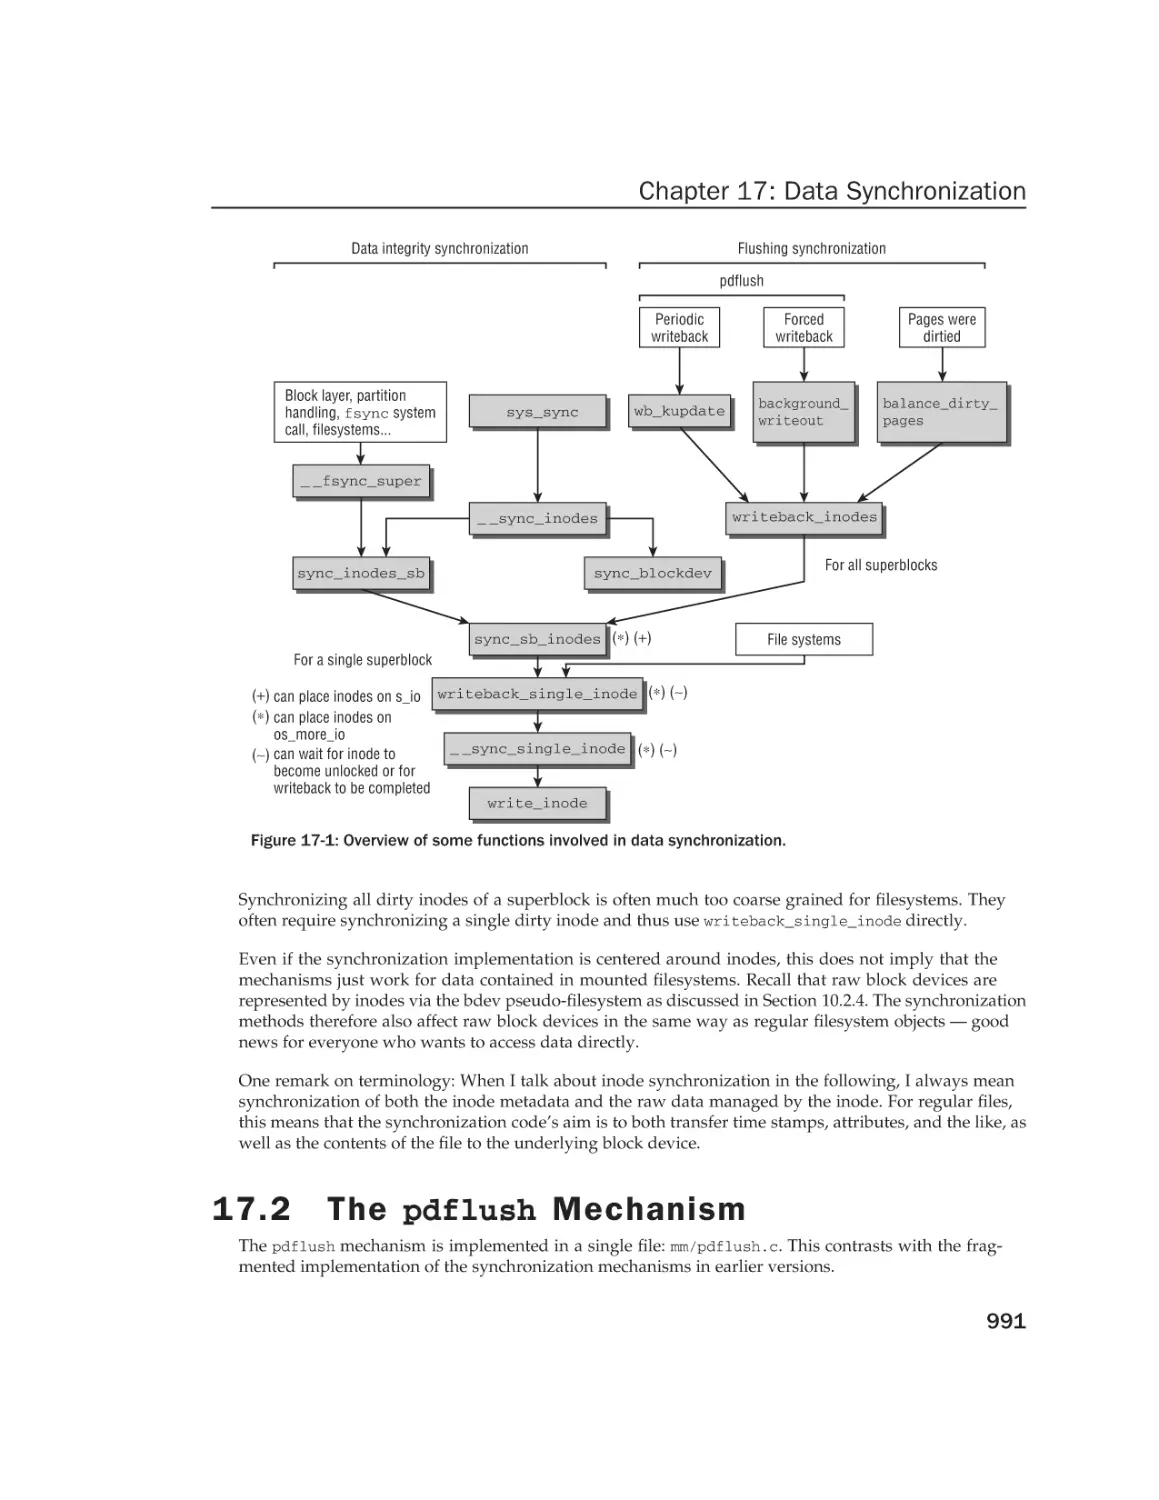 17.2 The pdflush Mechanism